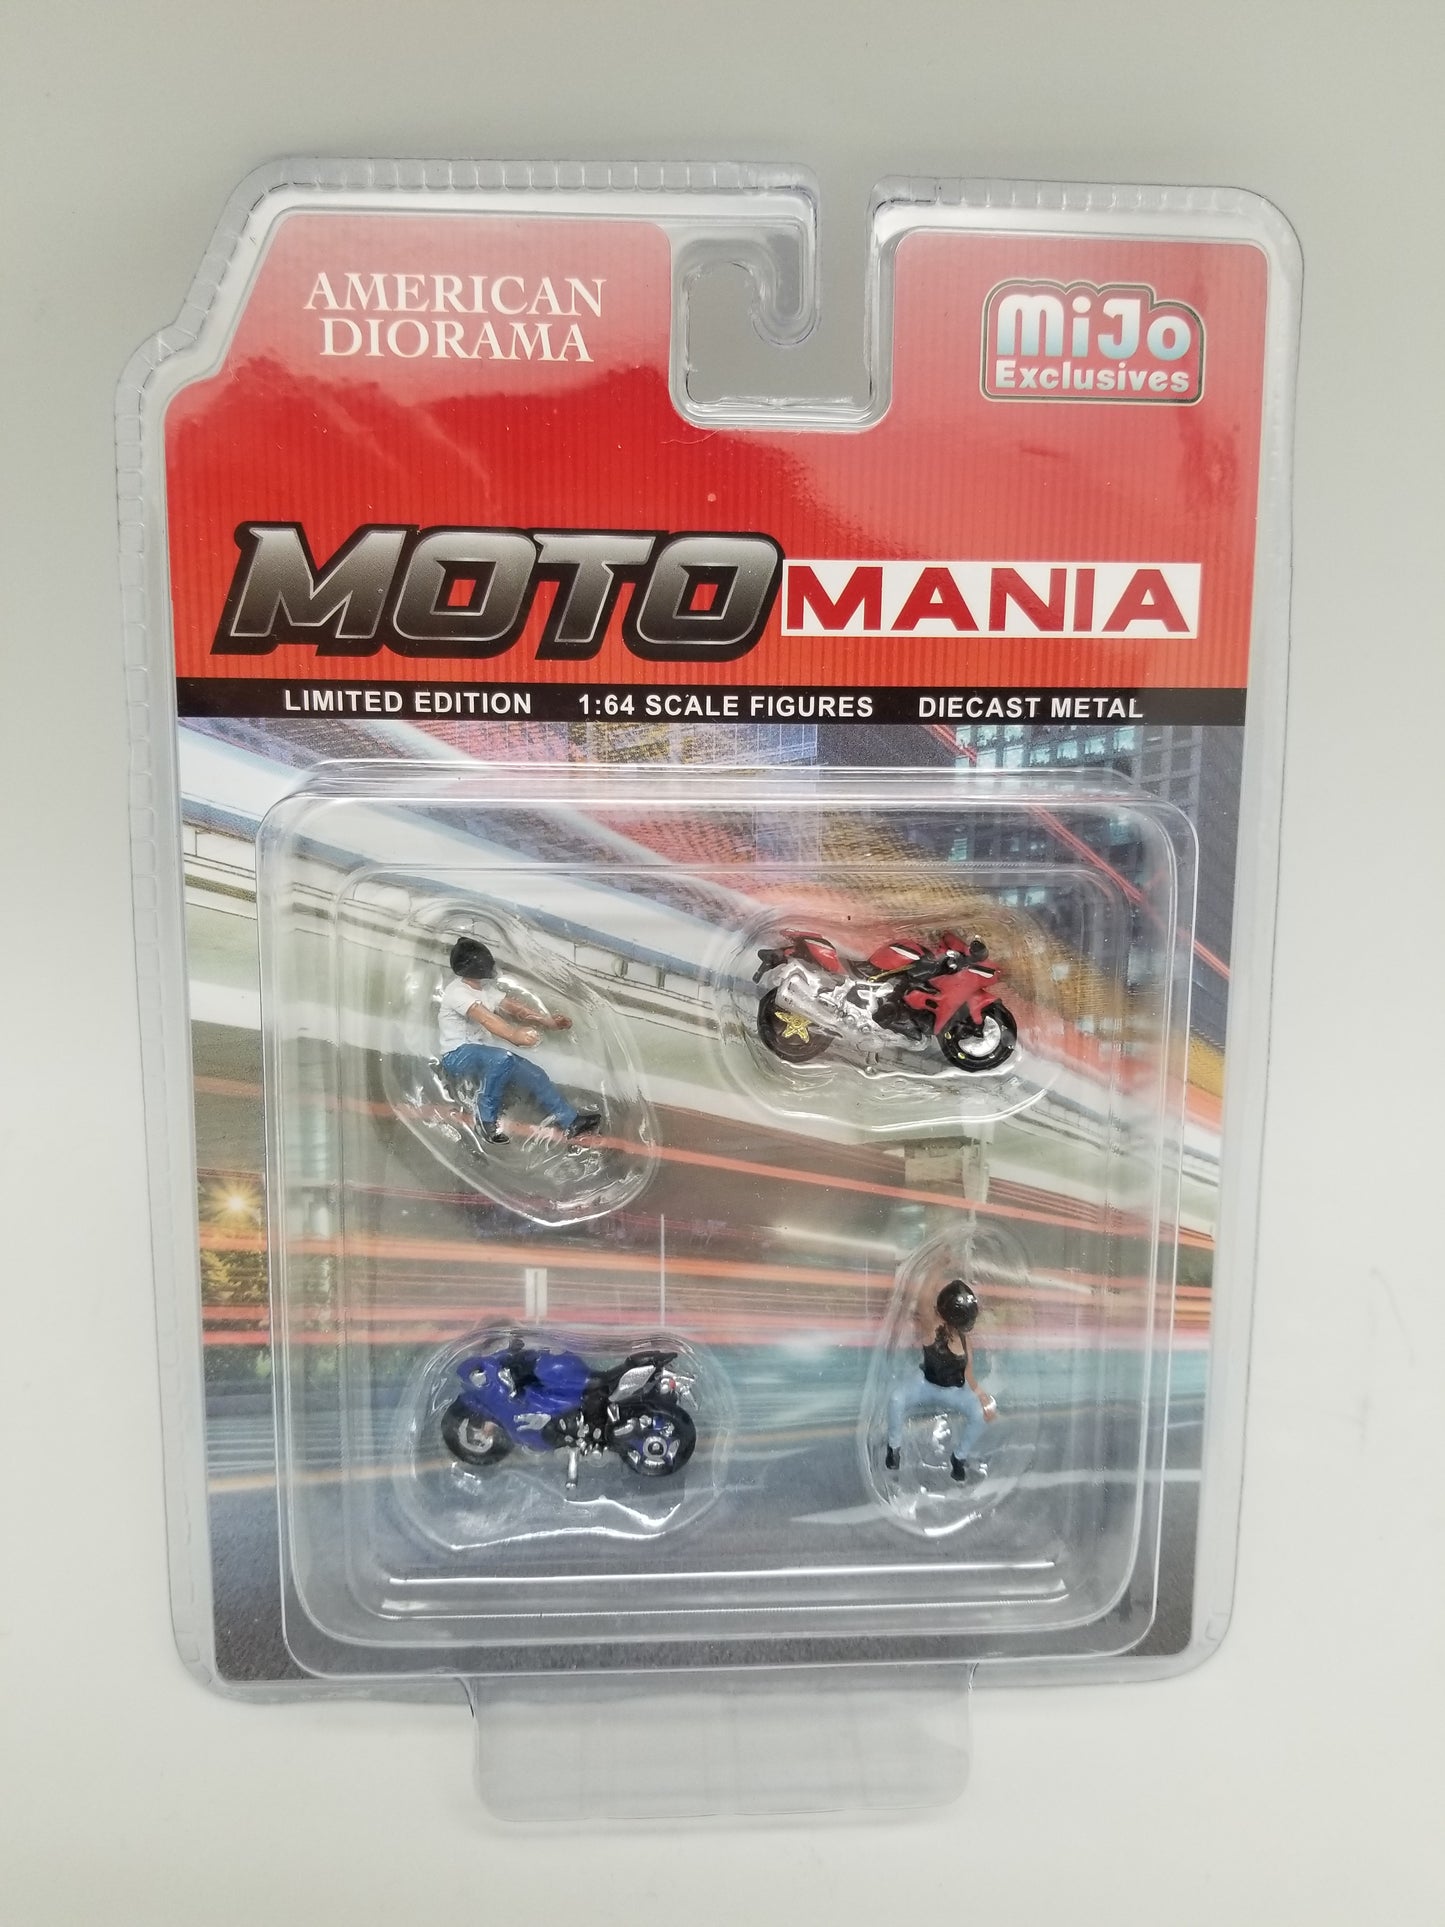 American Diorama MotoMania Motorcycles and Riders